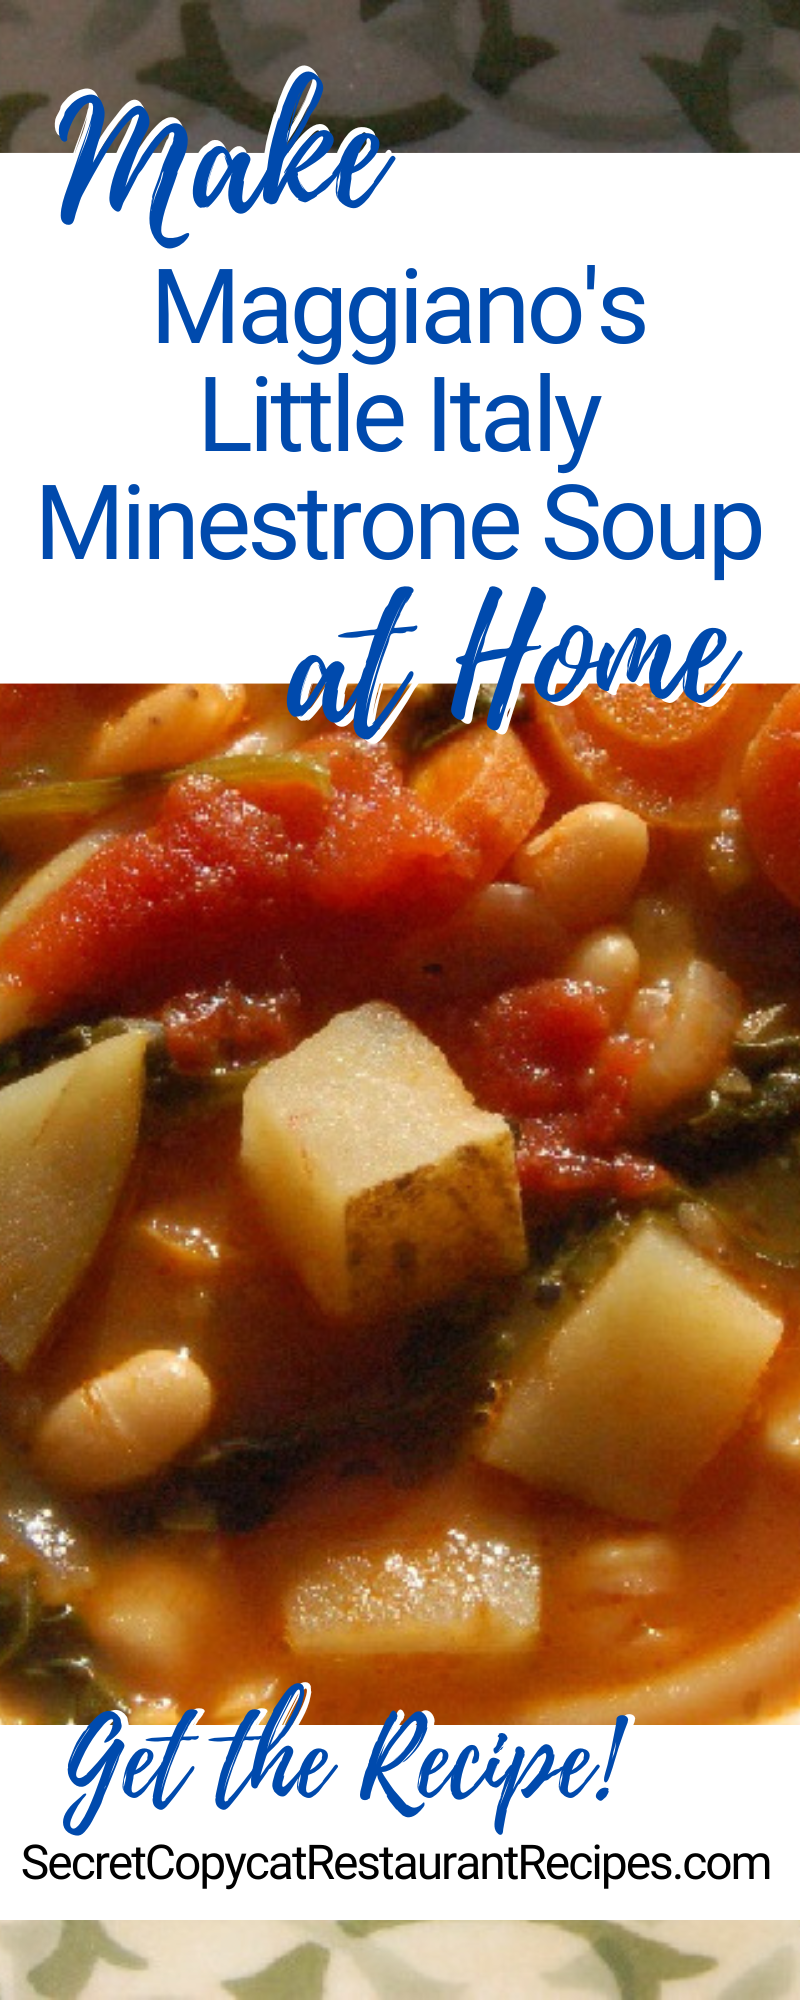 Maggiano's Little Italy Minestrone Soup Recipe